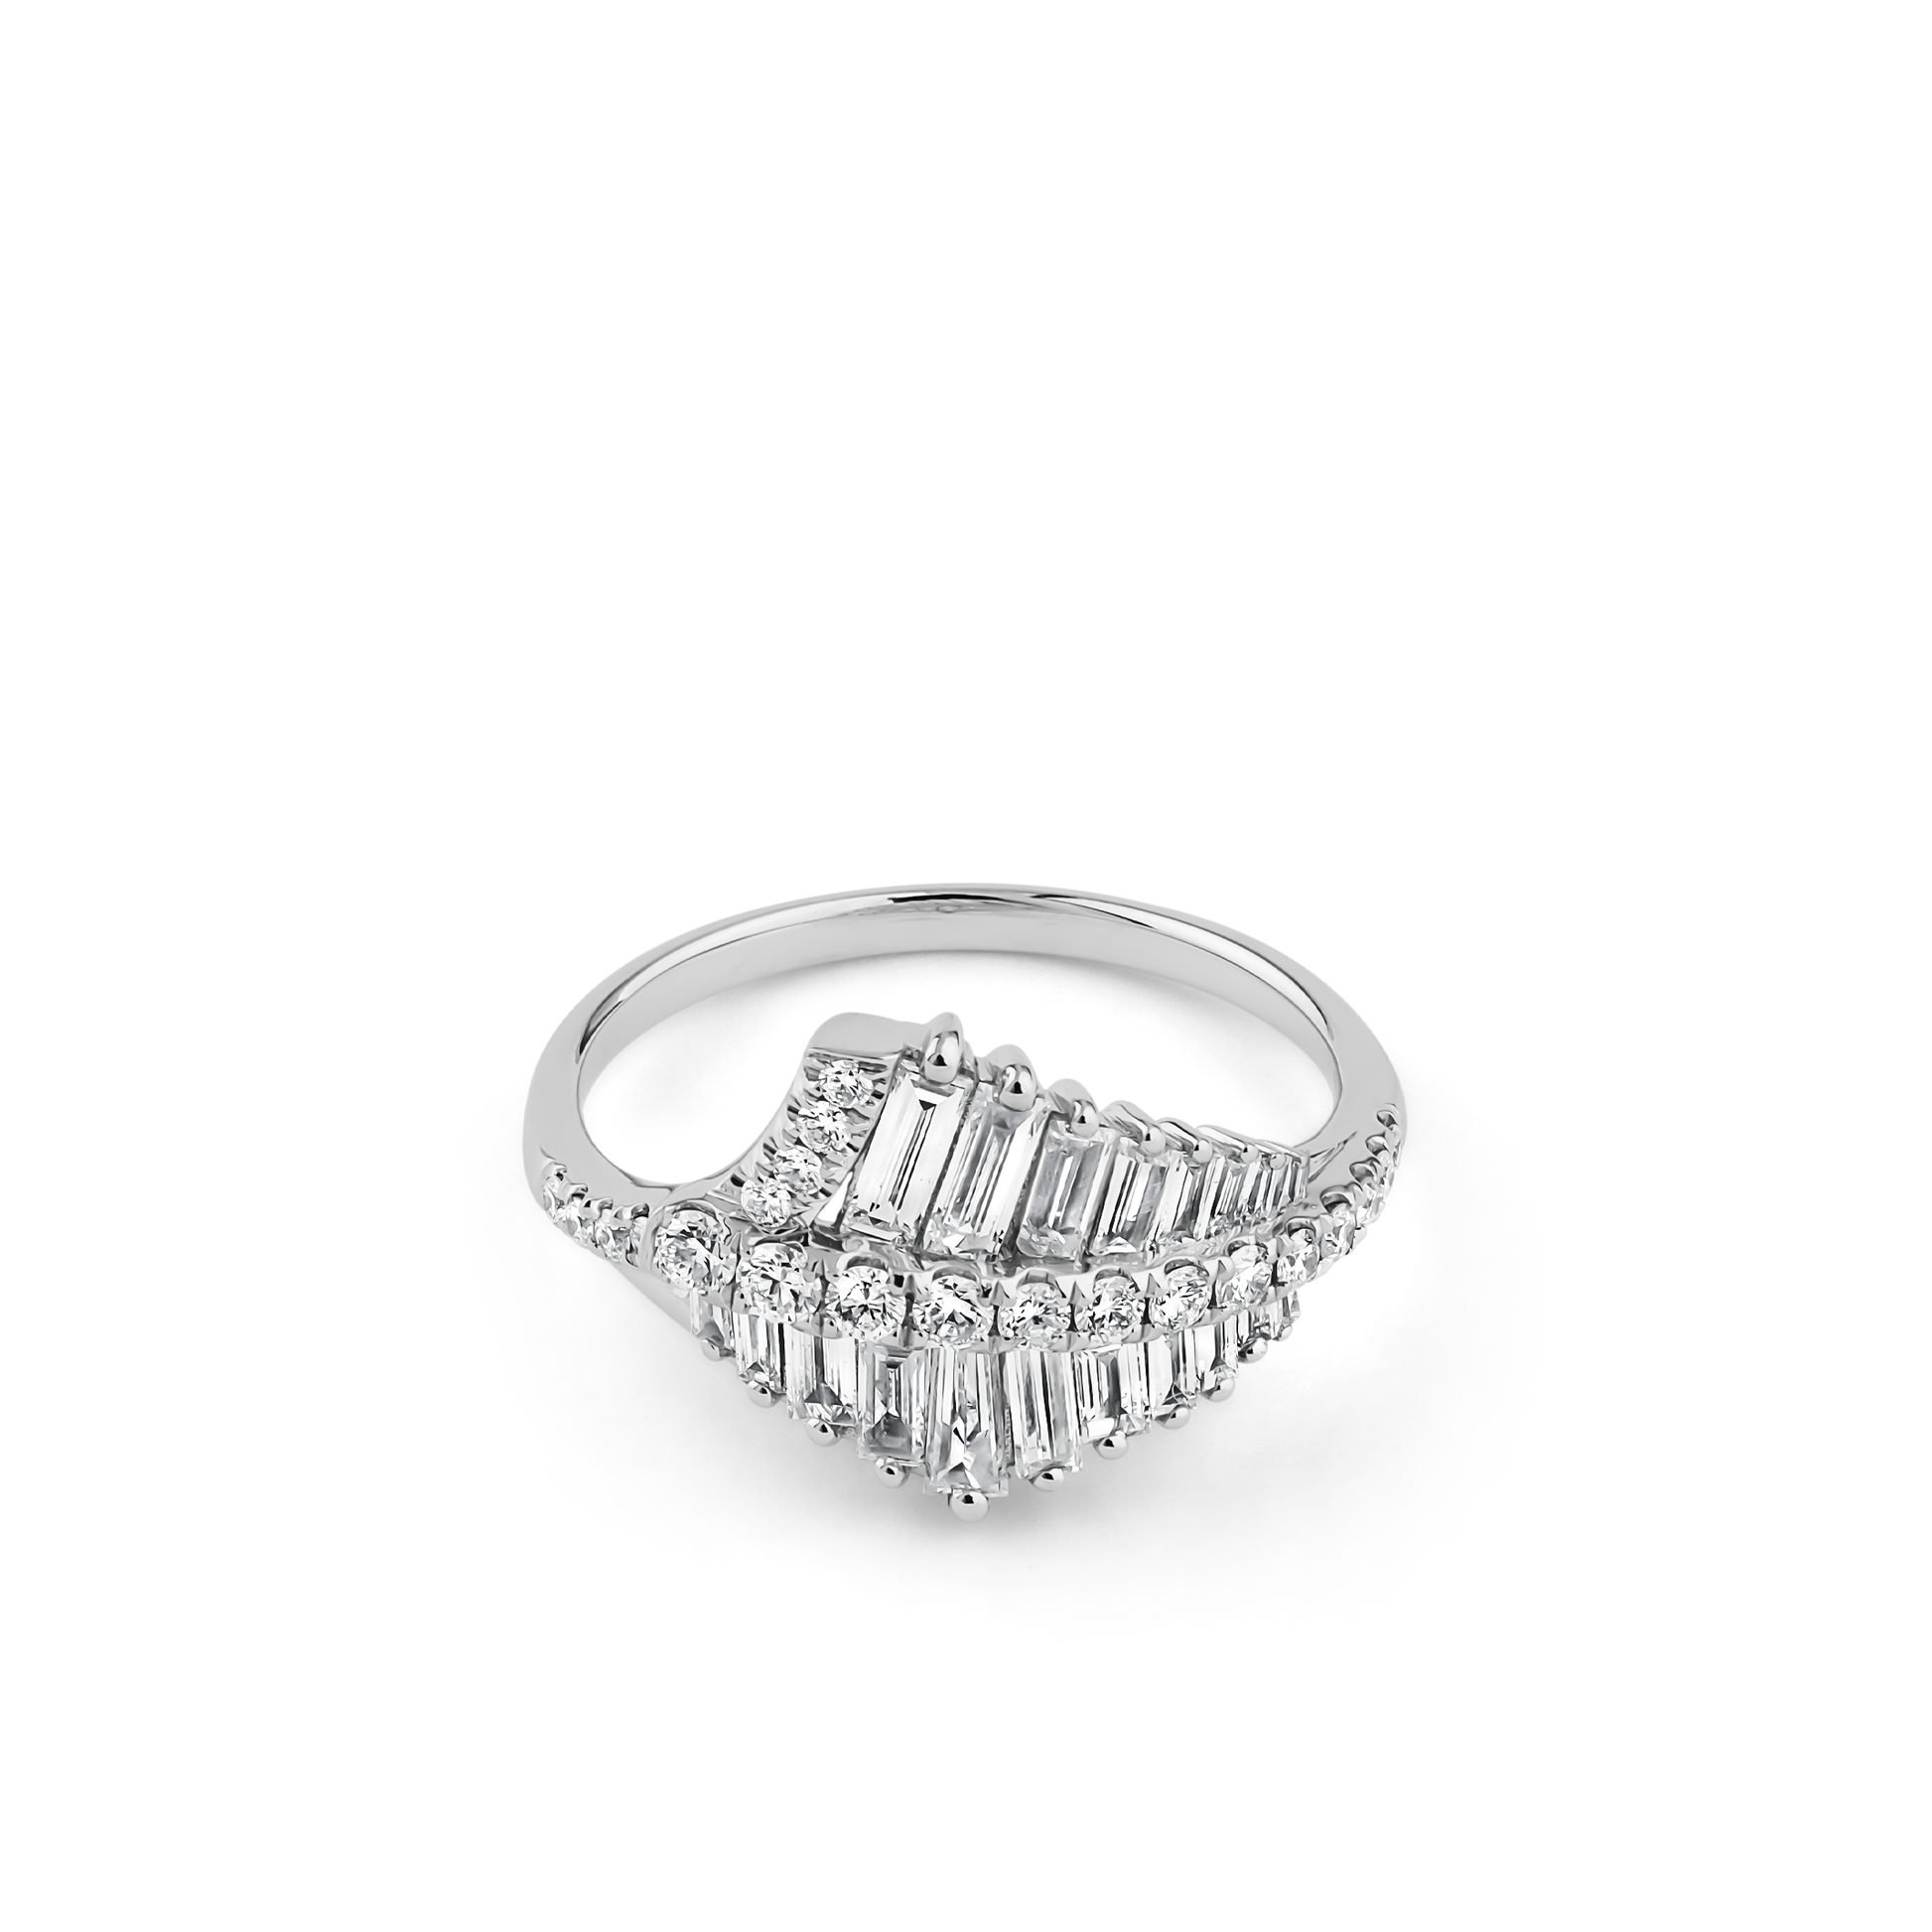 Oliver Heemeyer Una Diamond Ring made of 18k white gold.